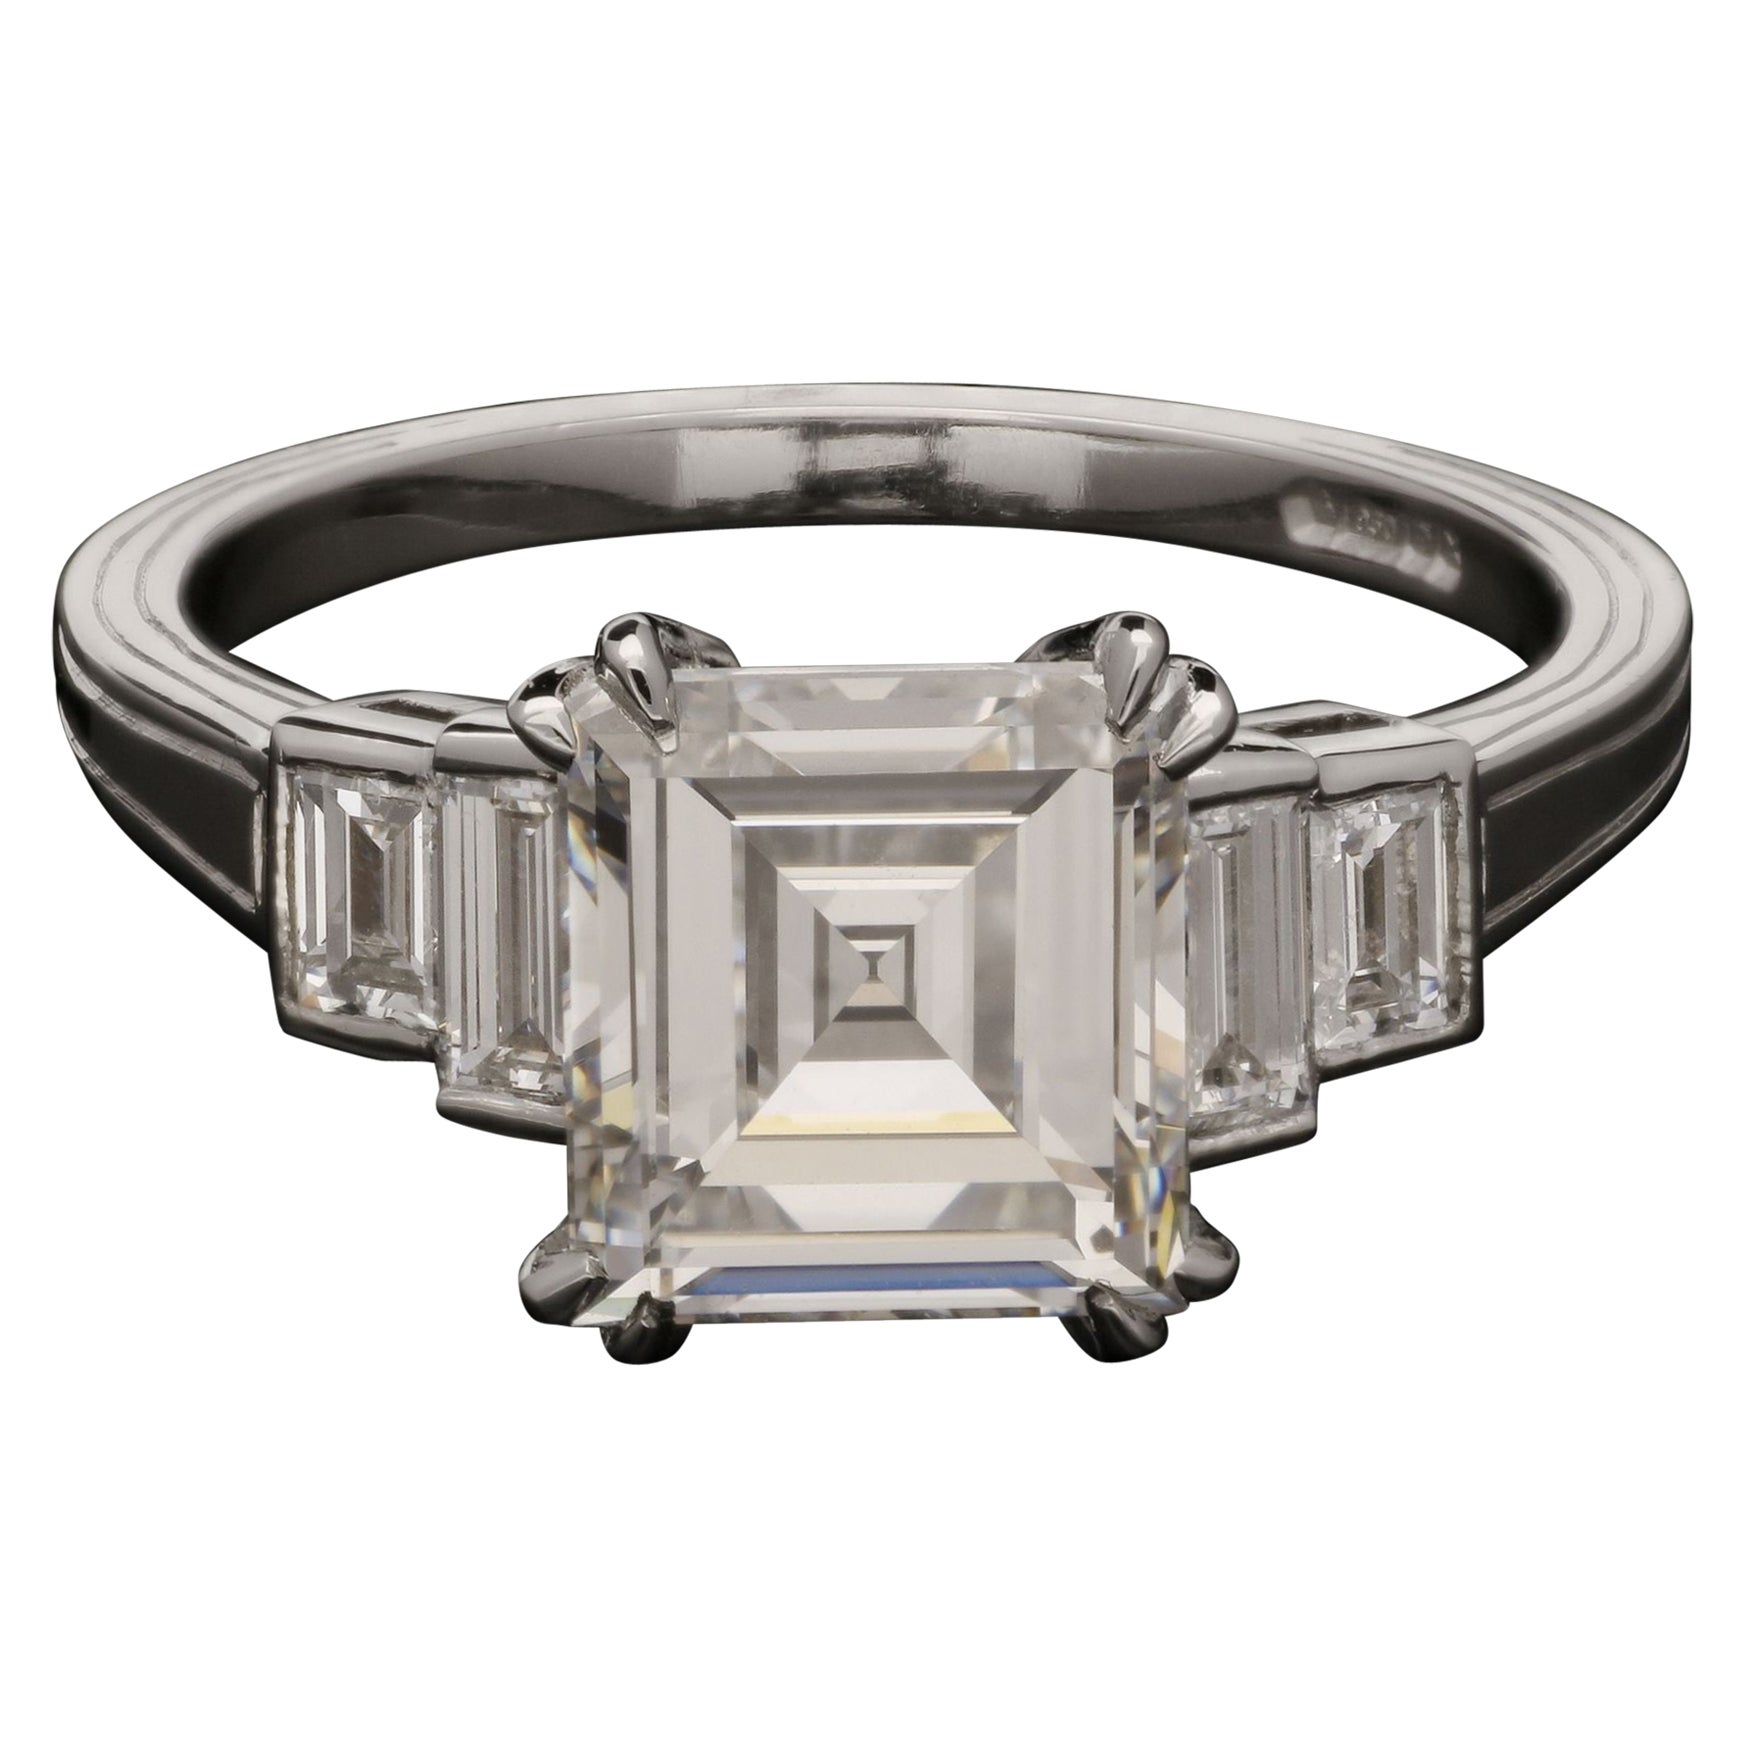 Hancocks 2.28ct Carre Cut Diamond and Platinum Ring Contemporary